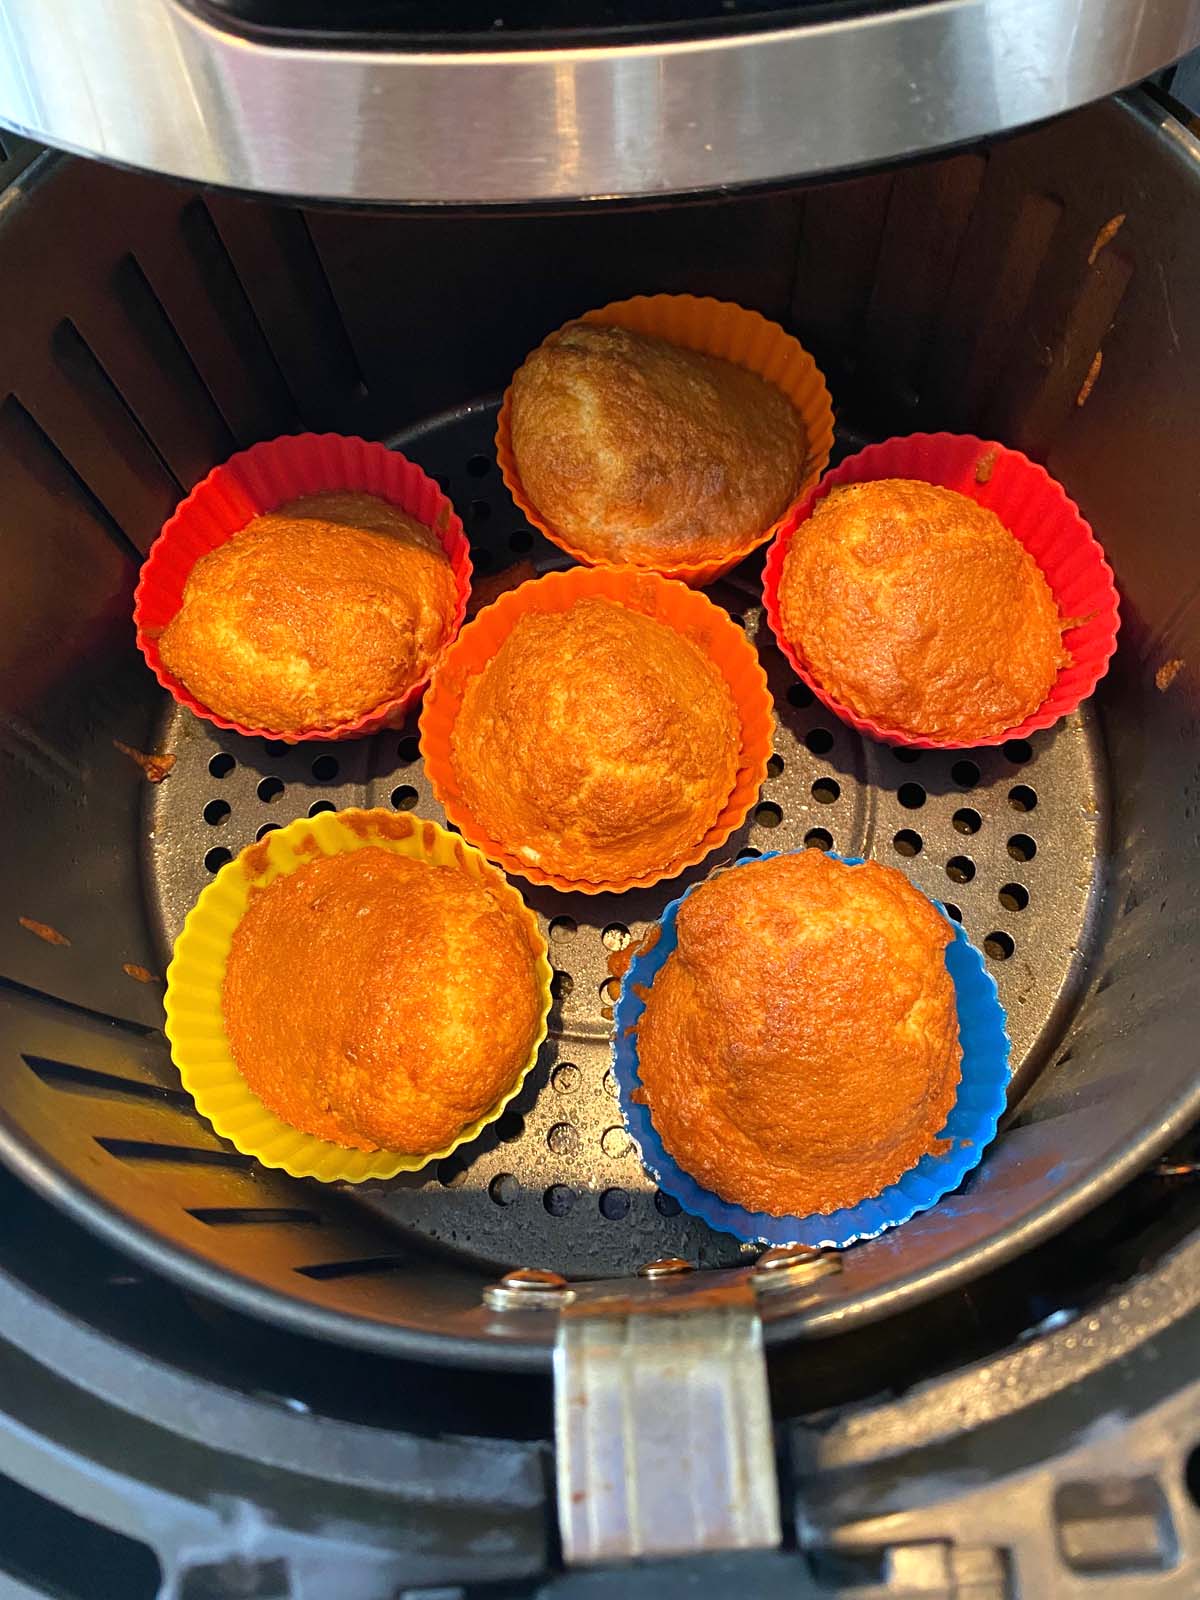 https://www.melaniecooks.com/wp-content/uploads/2022/05/Air-Fryer-Muffins-From-Cake-Mix-6.jpg